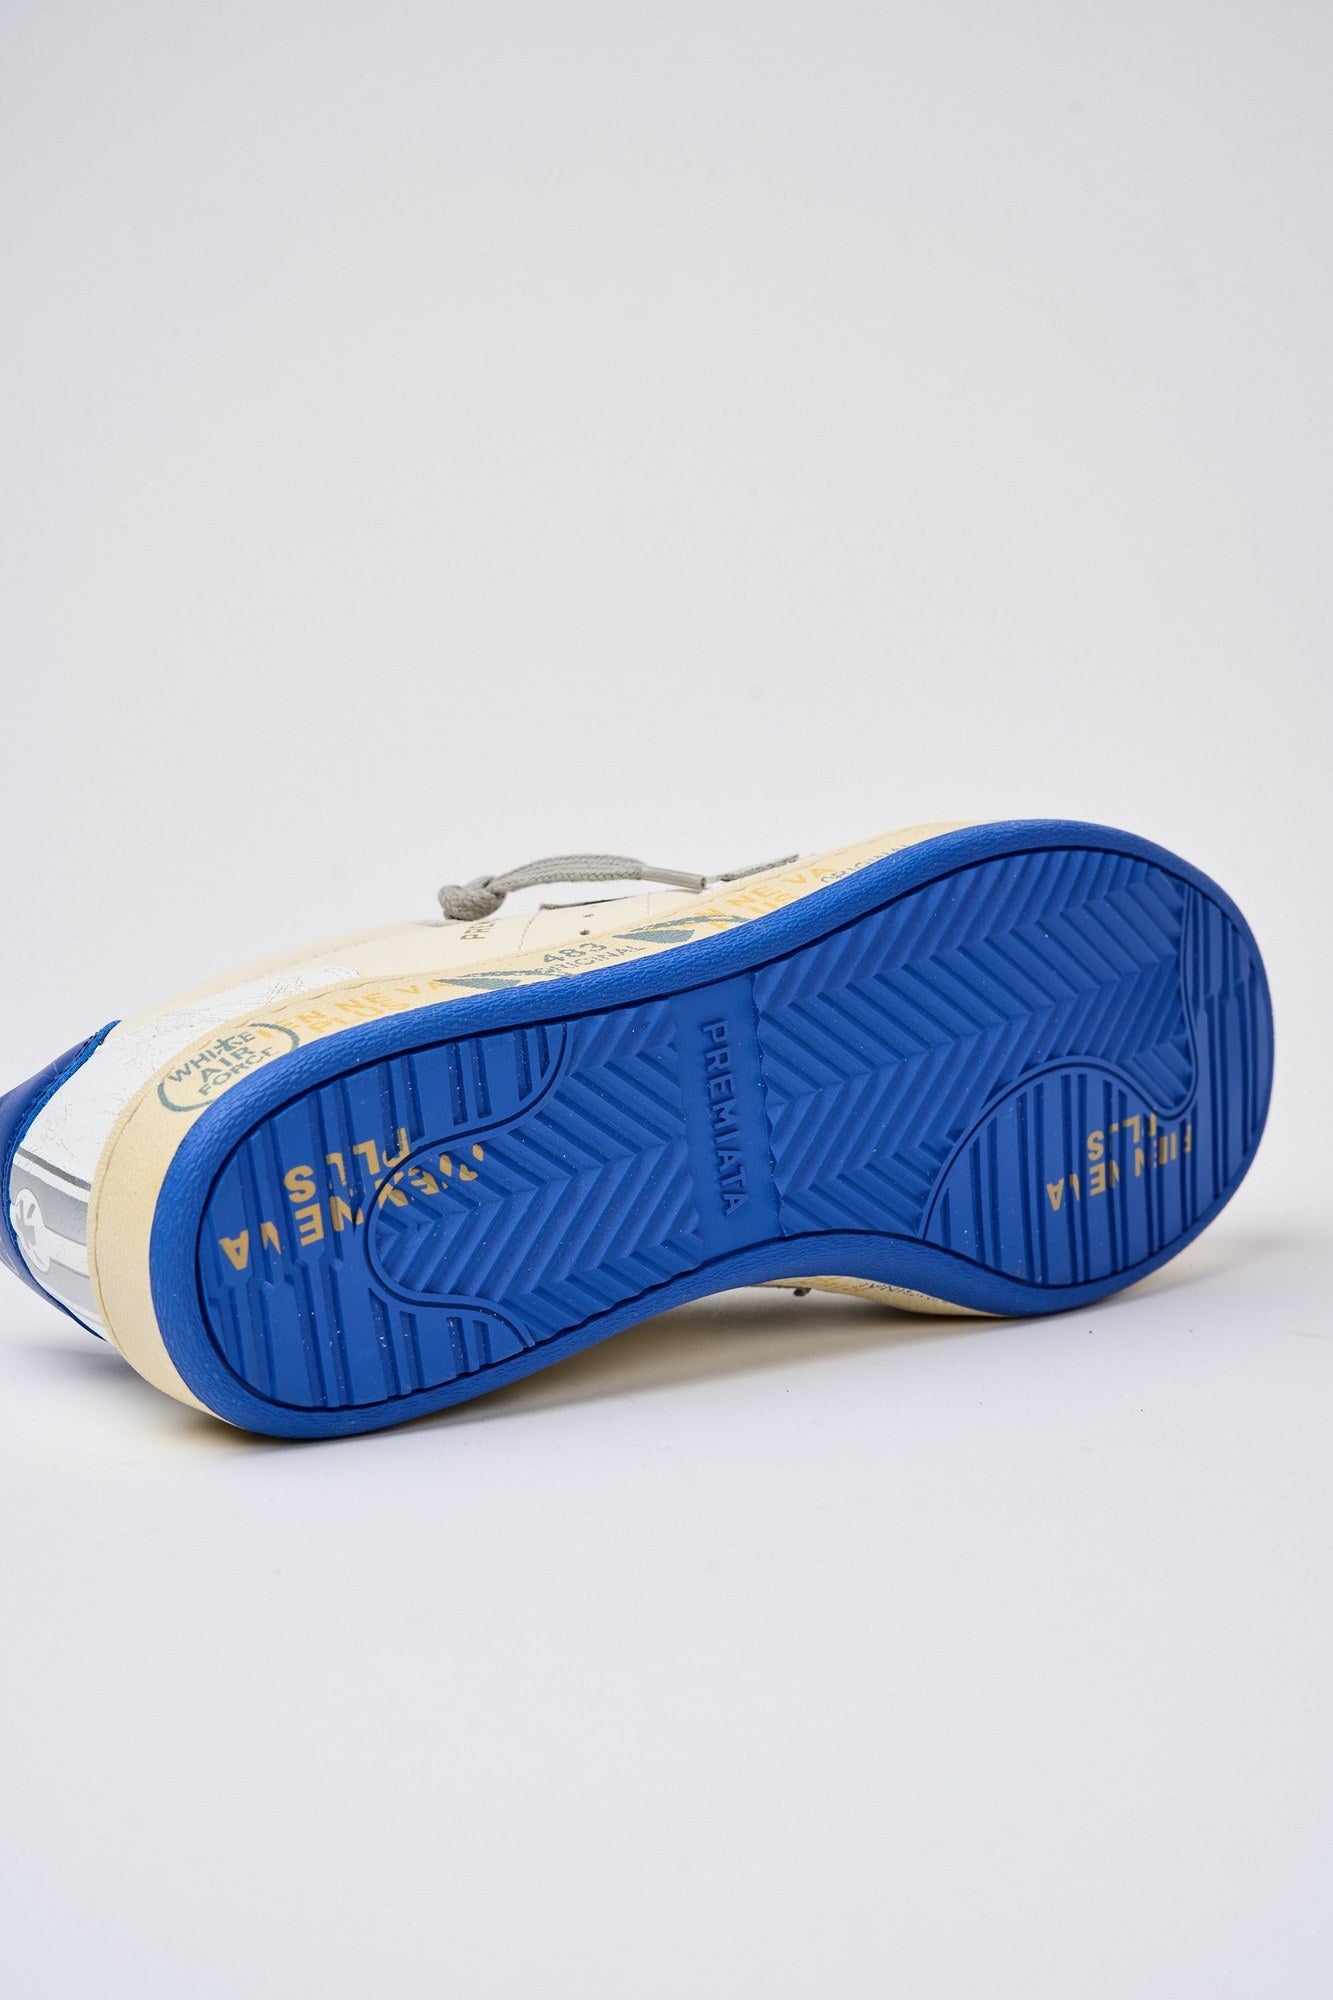 Premiata Sneaker Basket Clay in Leather/Suede Beige/Light Blue-6